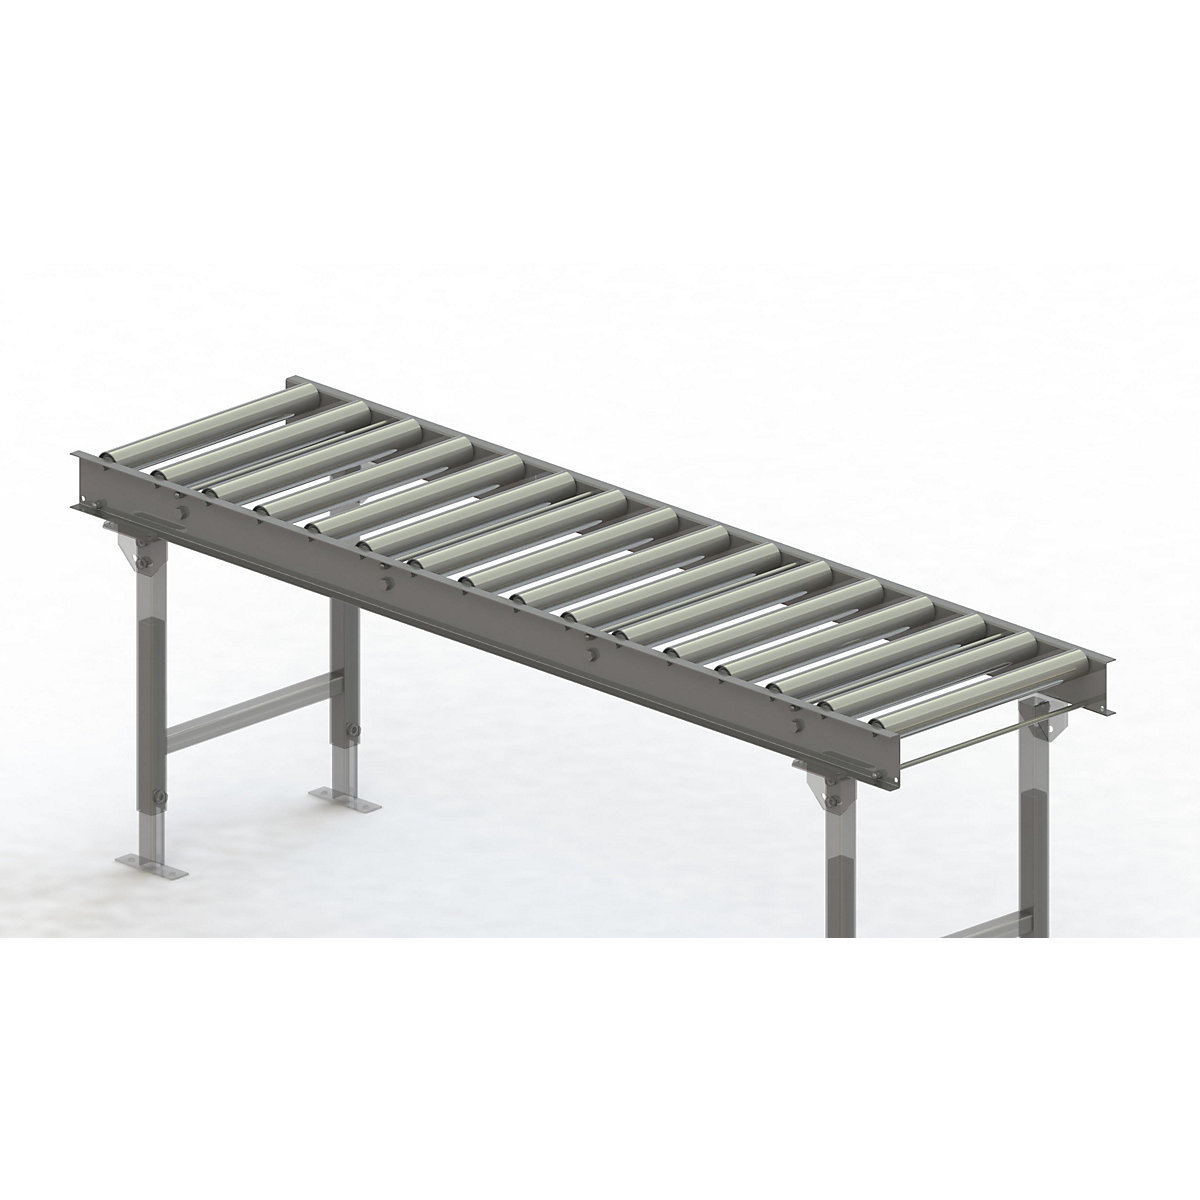 Gura – Roller conveyor, steel frame with zinc plated steel rollers, track width 500 mm, distance between axles 125 mm, length 2 m